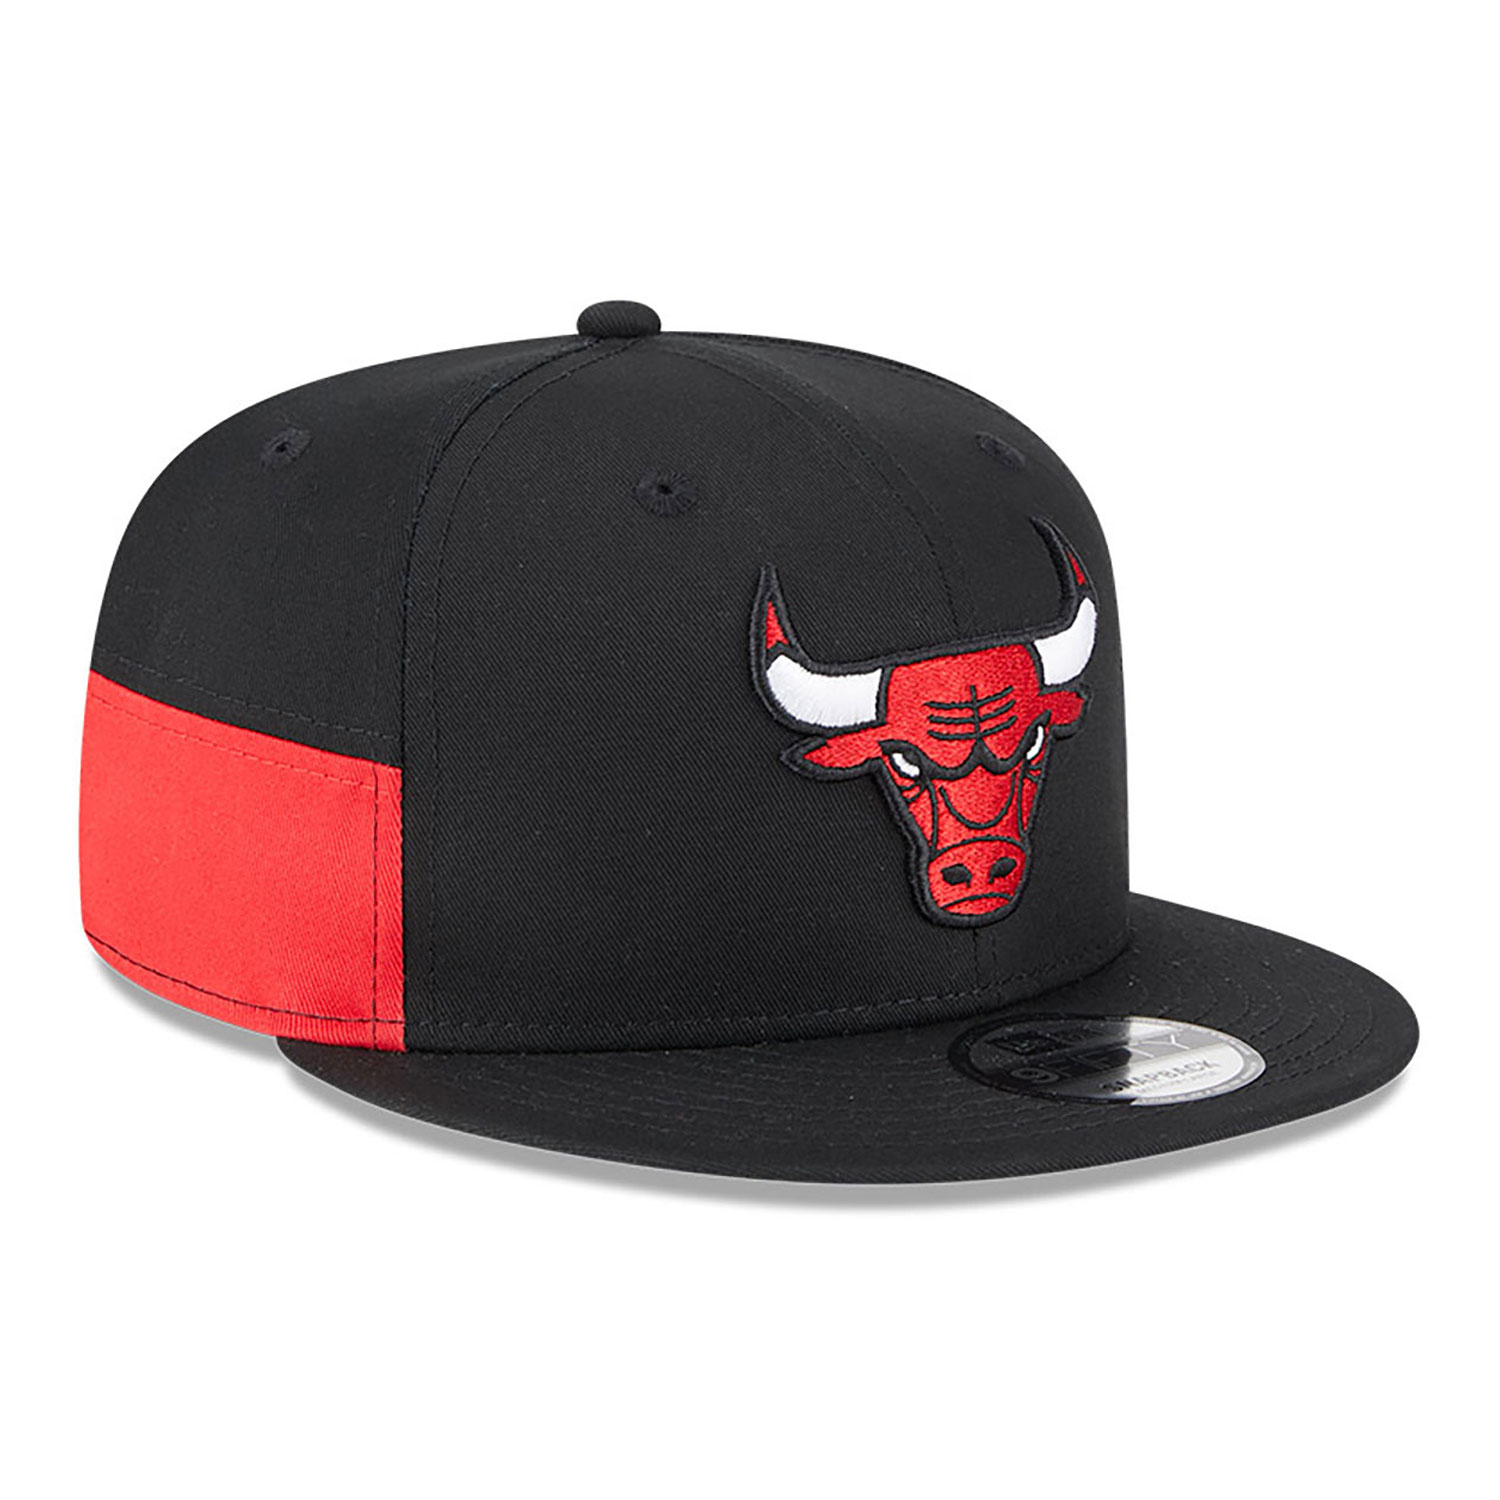 Chicago Bulls Multi Patch Black 9FIFTY Snapback Cap